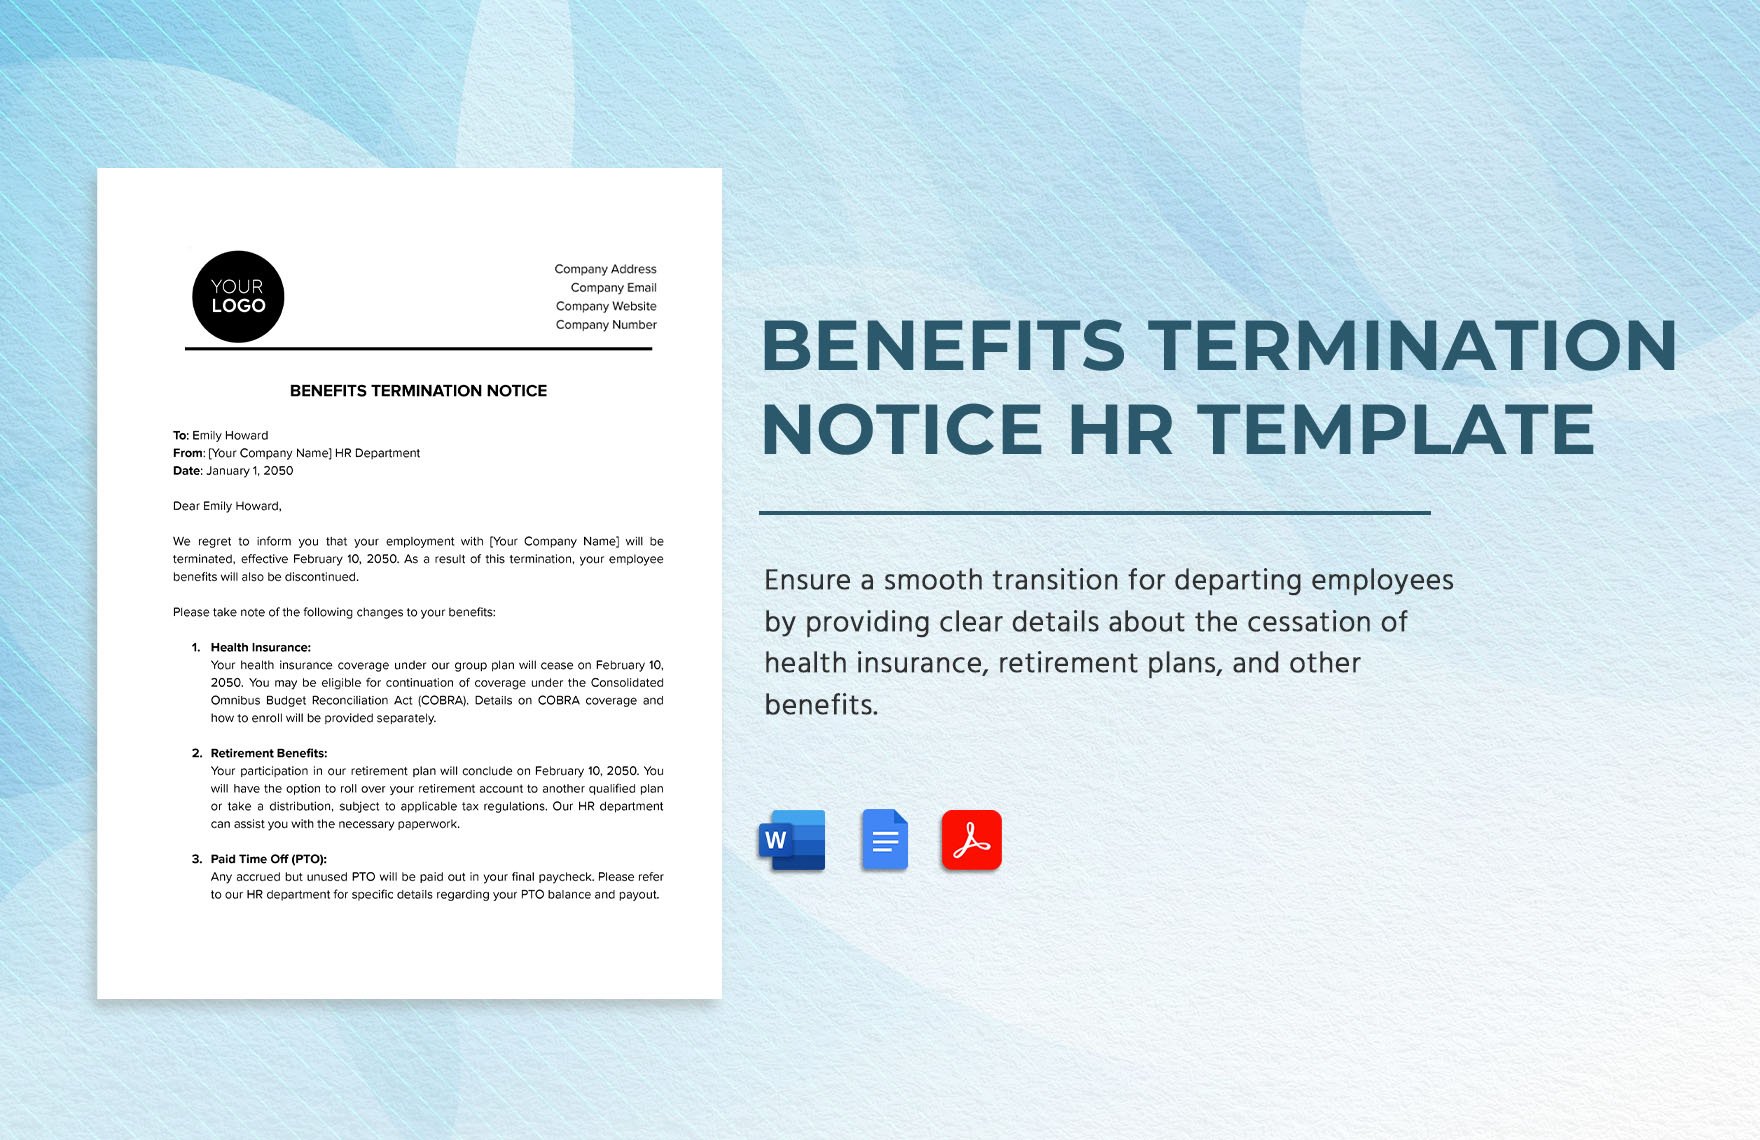 Benefits Termination Notice HR Template in Word, Google Docs, PDF